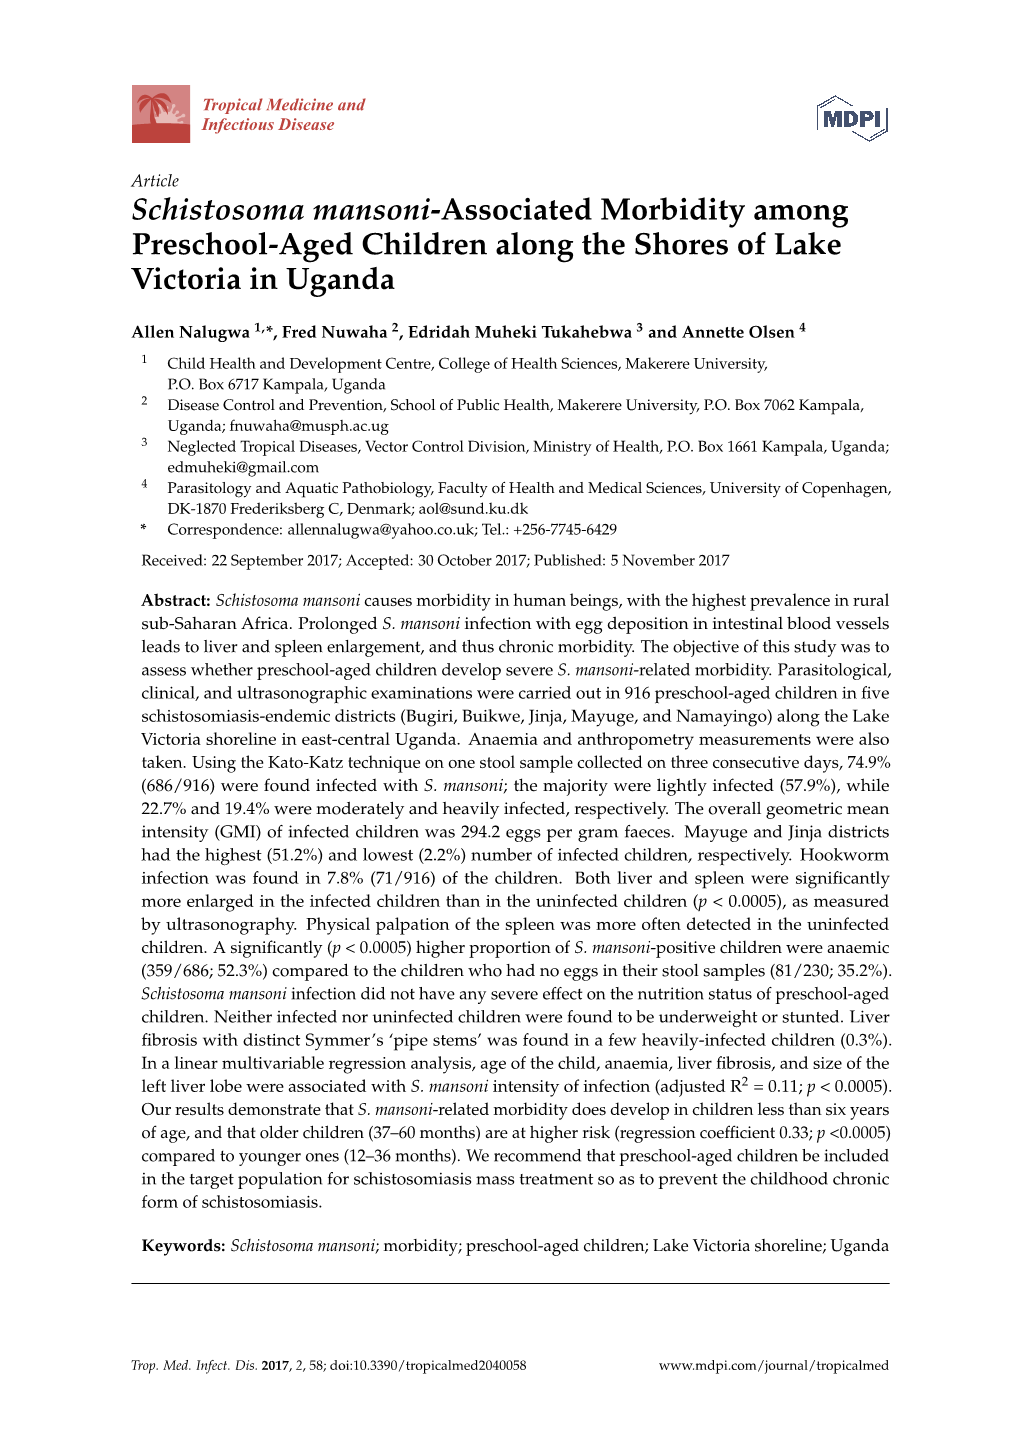 Schistosoma Mansoni-Associated Morbidity Among Preschool-Aged Children Along the Shores of Lake Victoria in Uganda